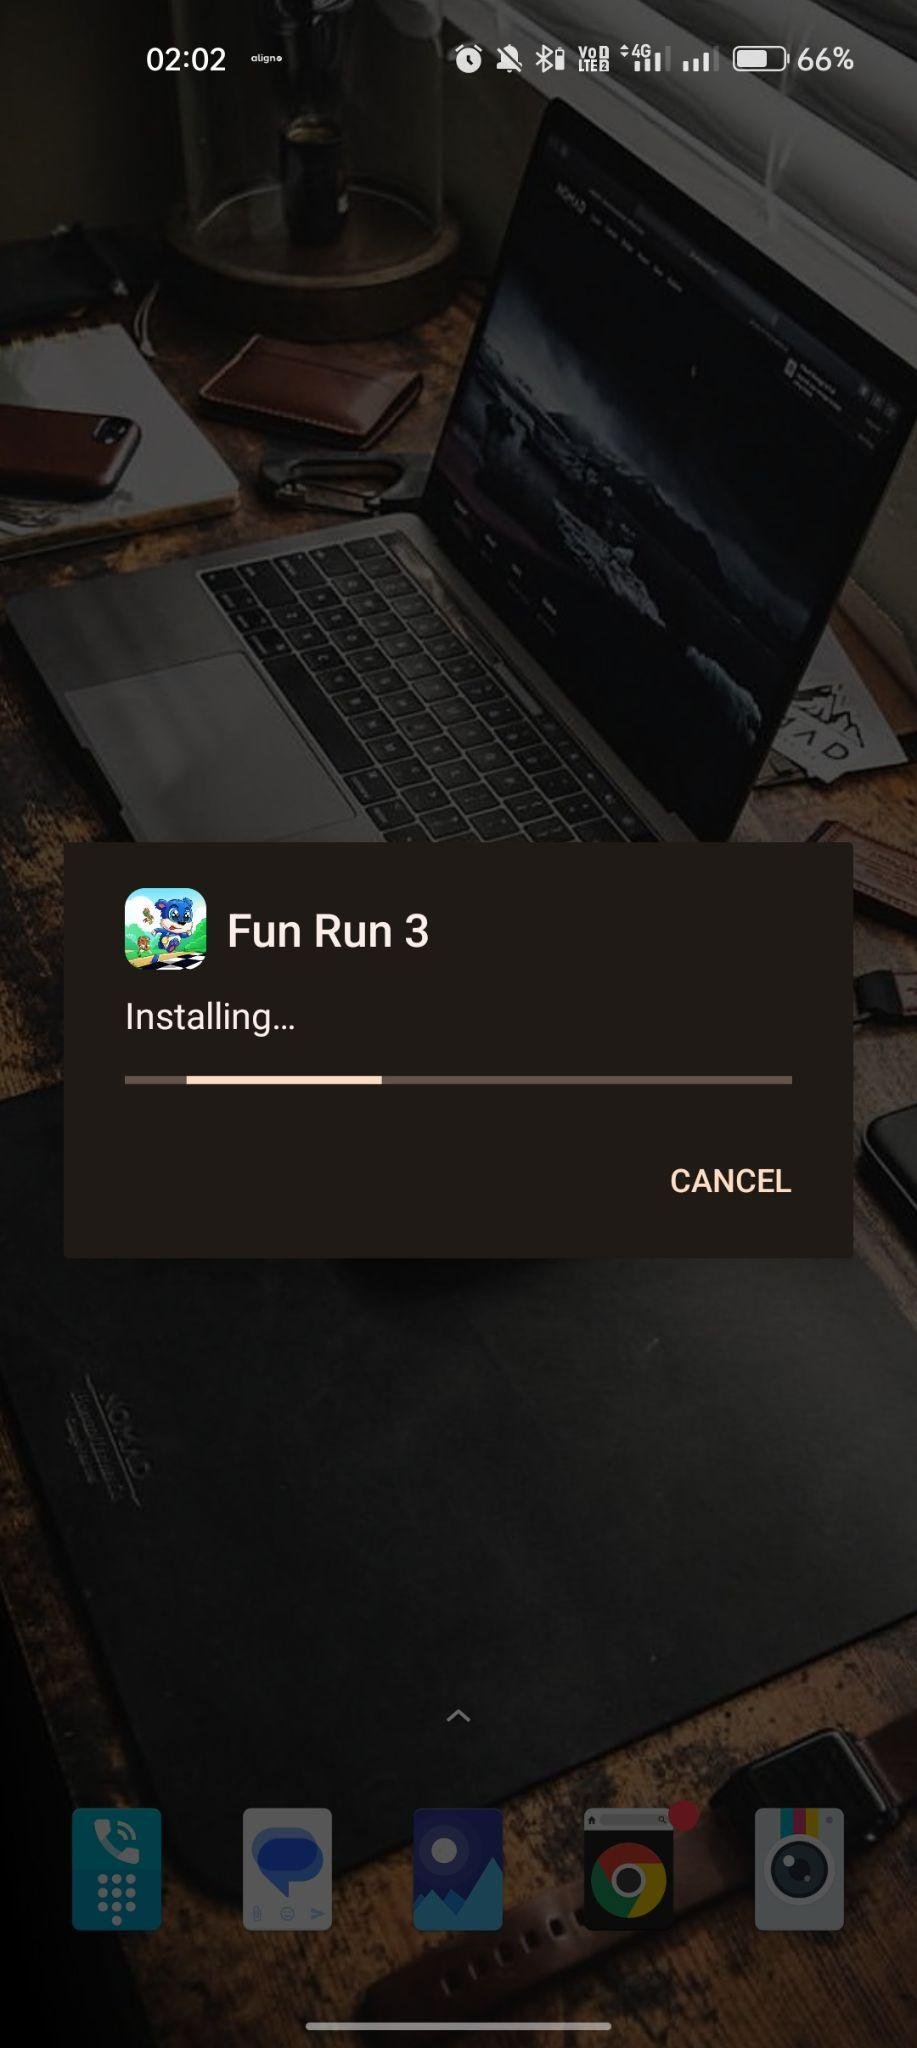 Fun Run 3 apk installing